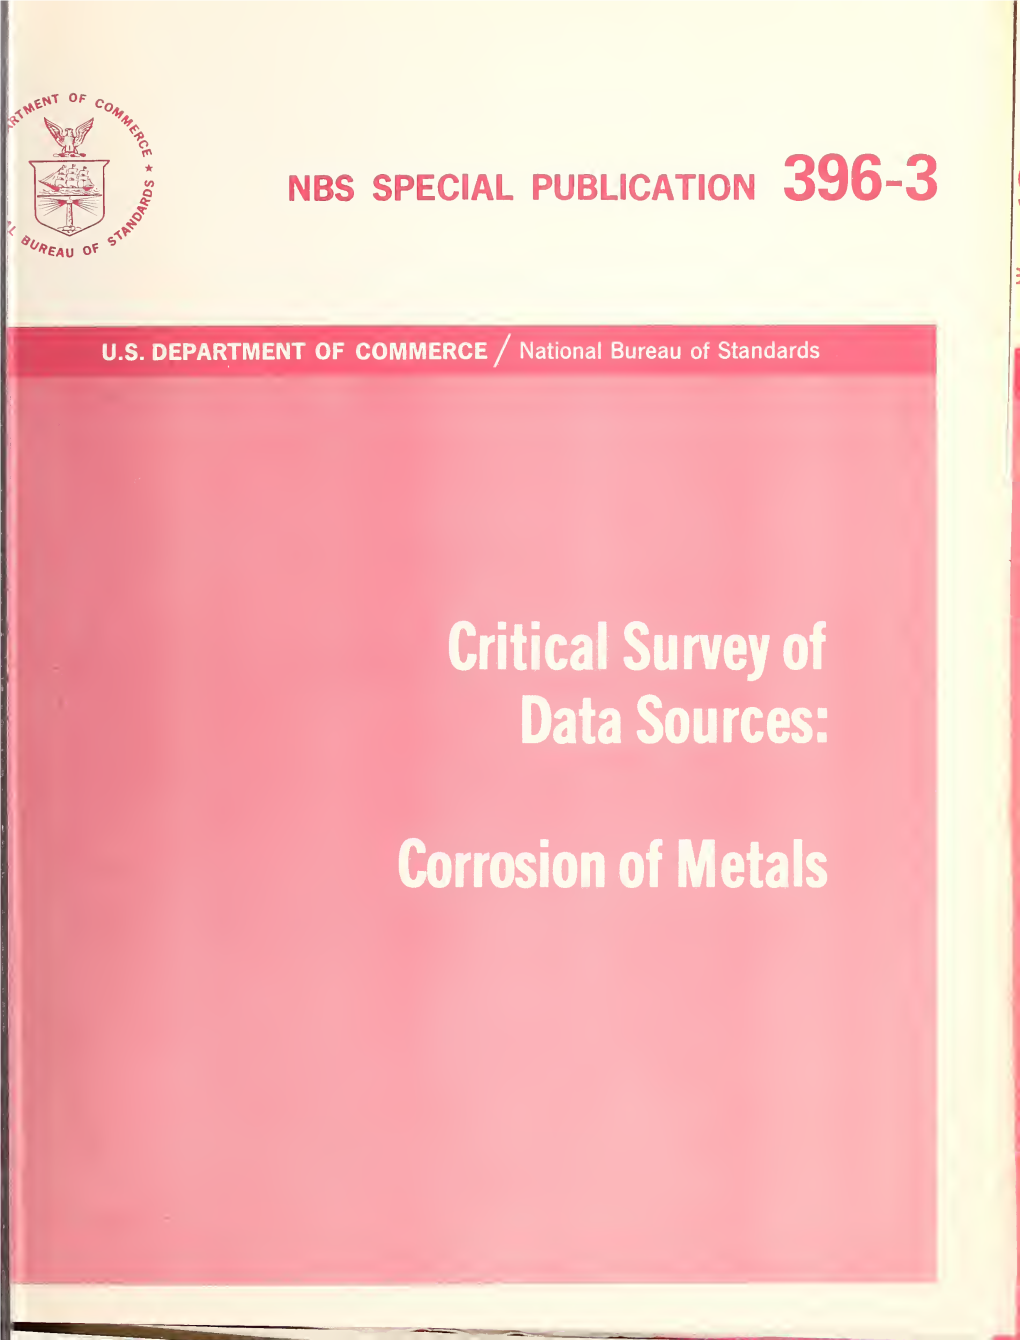 Corrosion of Metals